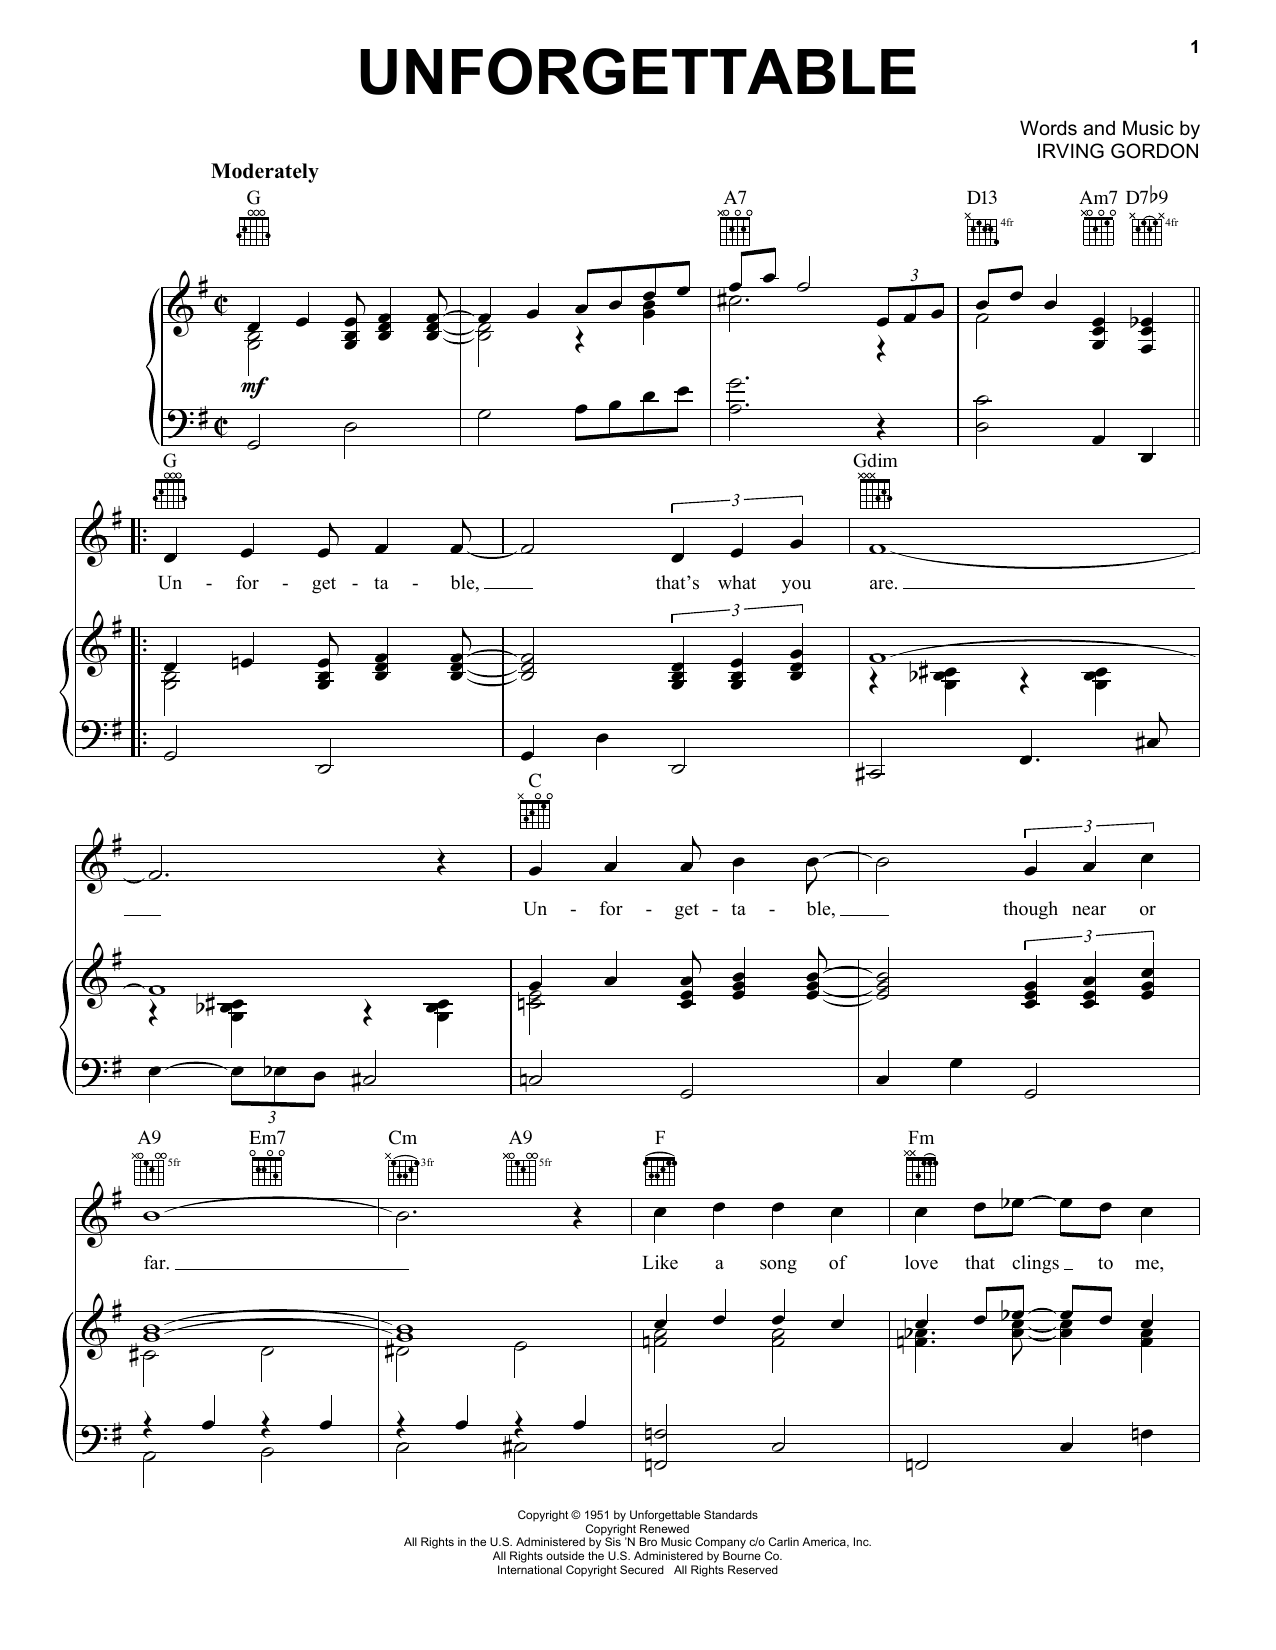 Irving Gordon Unforgettable Sheet Music Notes & Chords for Ukulele - Download or Print PDF